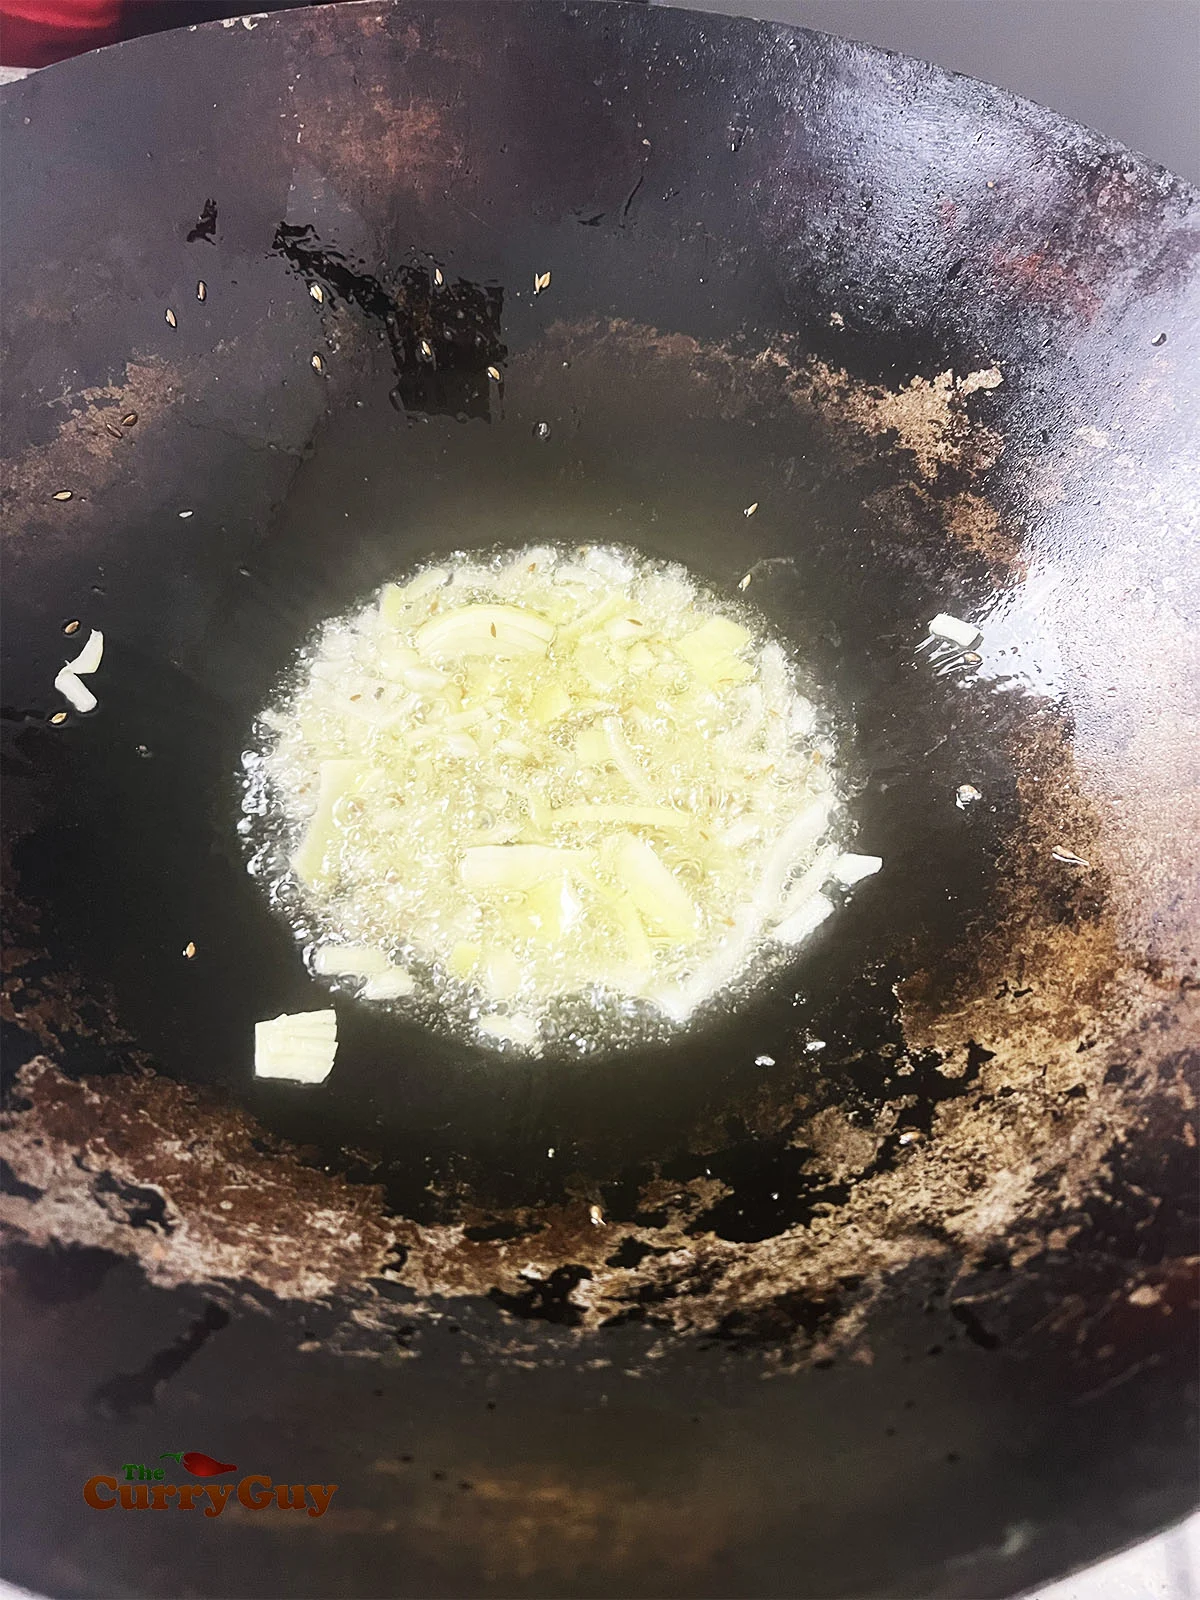 Adding the chopped onions